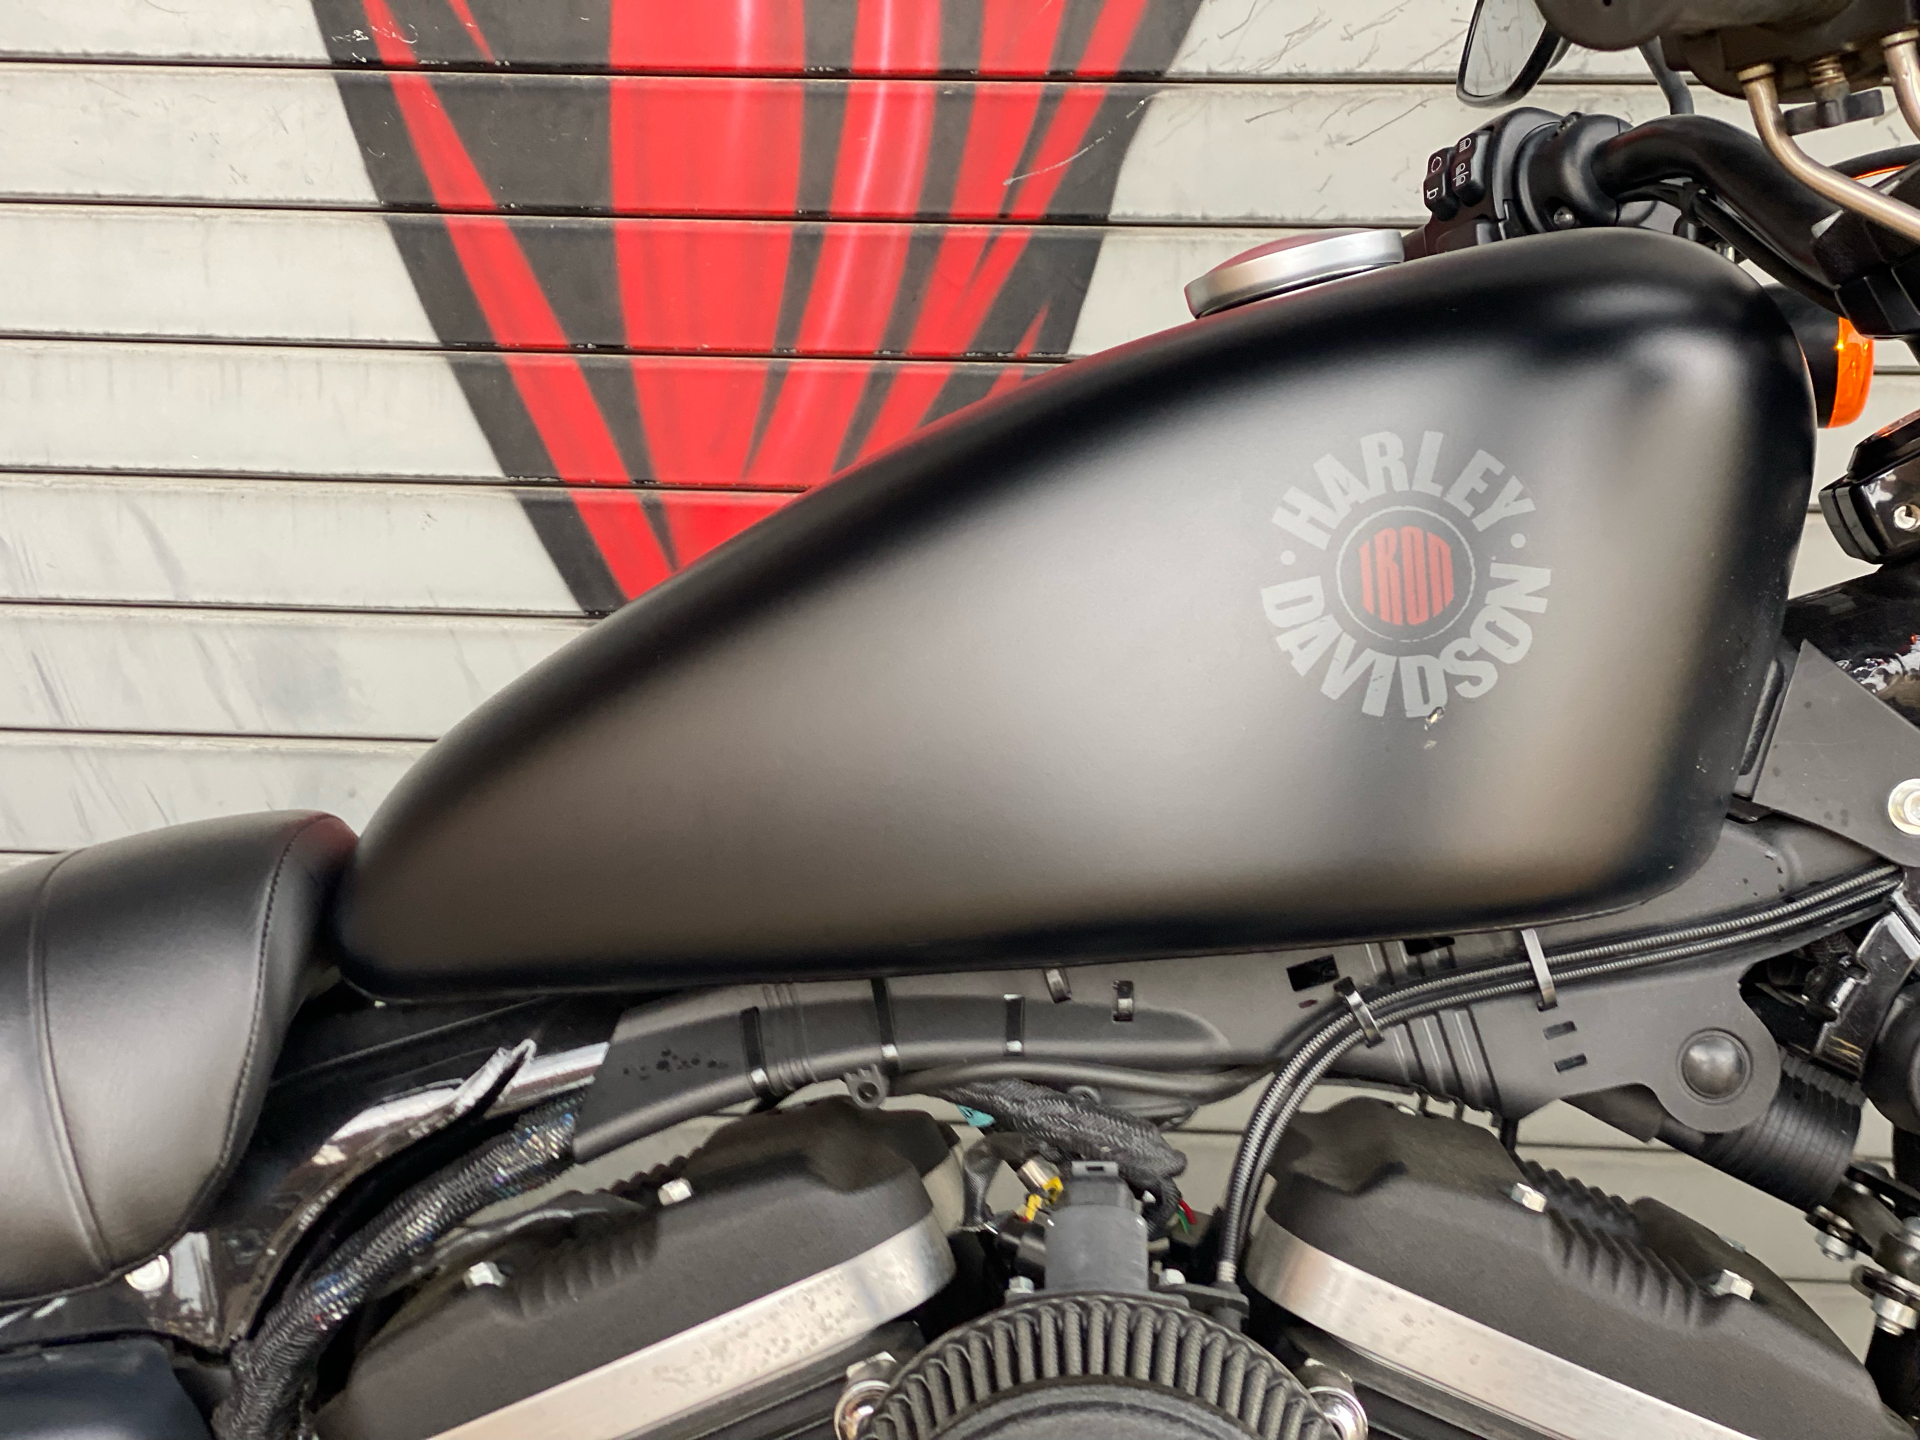 2020 Harley-Davidson Iron 883™ in Carrollton, Texas - Photo 5